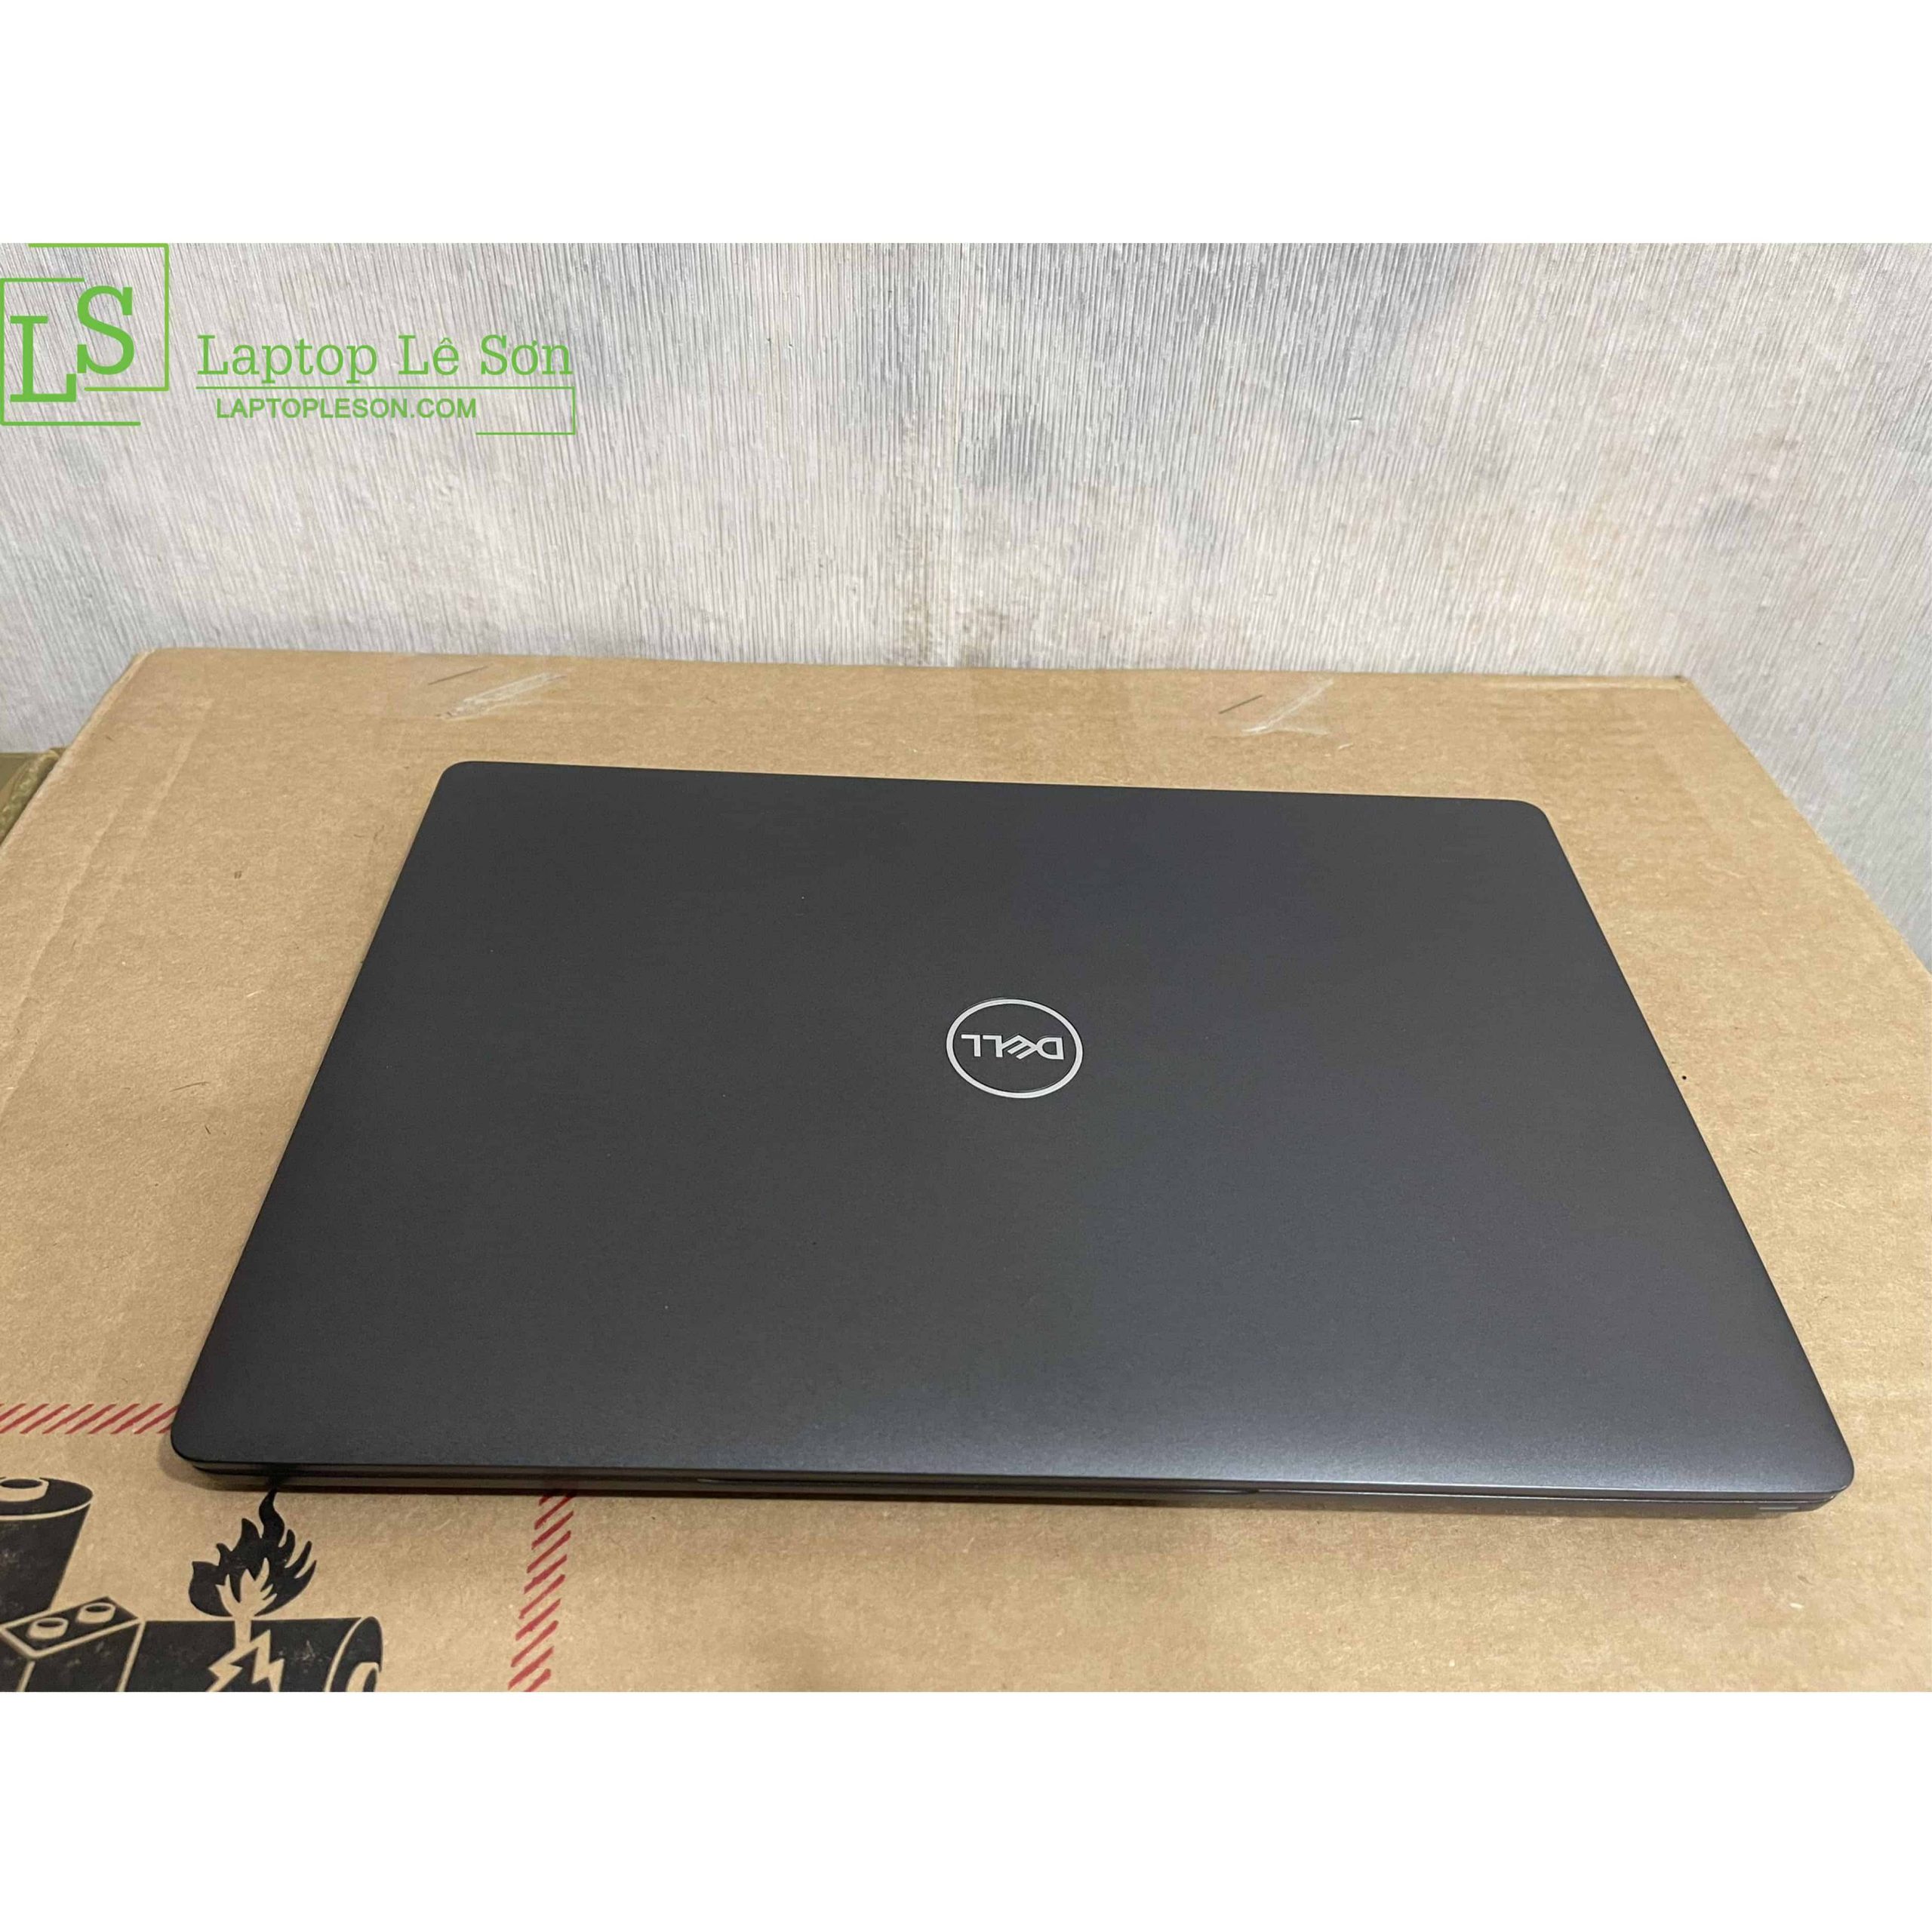 Dell Latitude 5300 - Laptop Lê Sơn